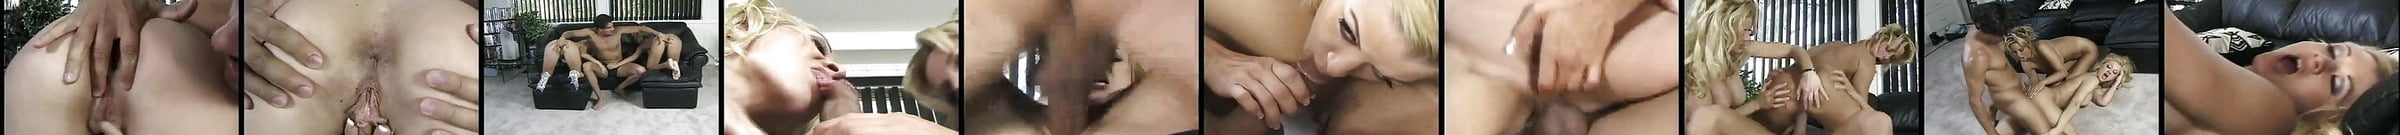 Featured Hot Mature Cougars Threeway Ffm Porn Videos